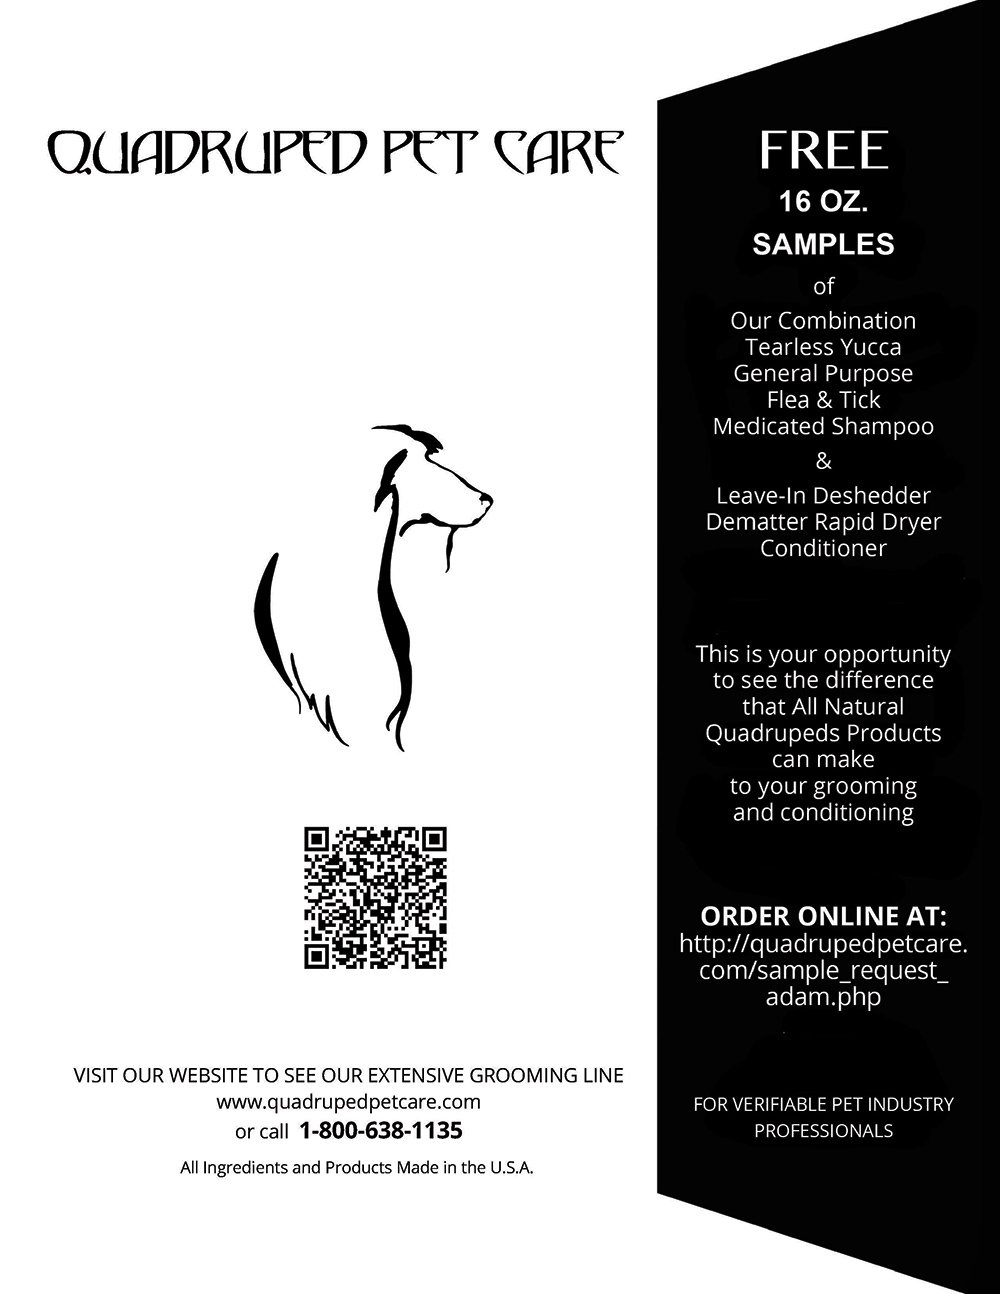 Quadruped Pet Care Advertisement